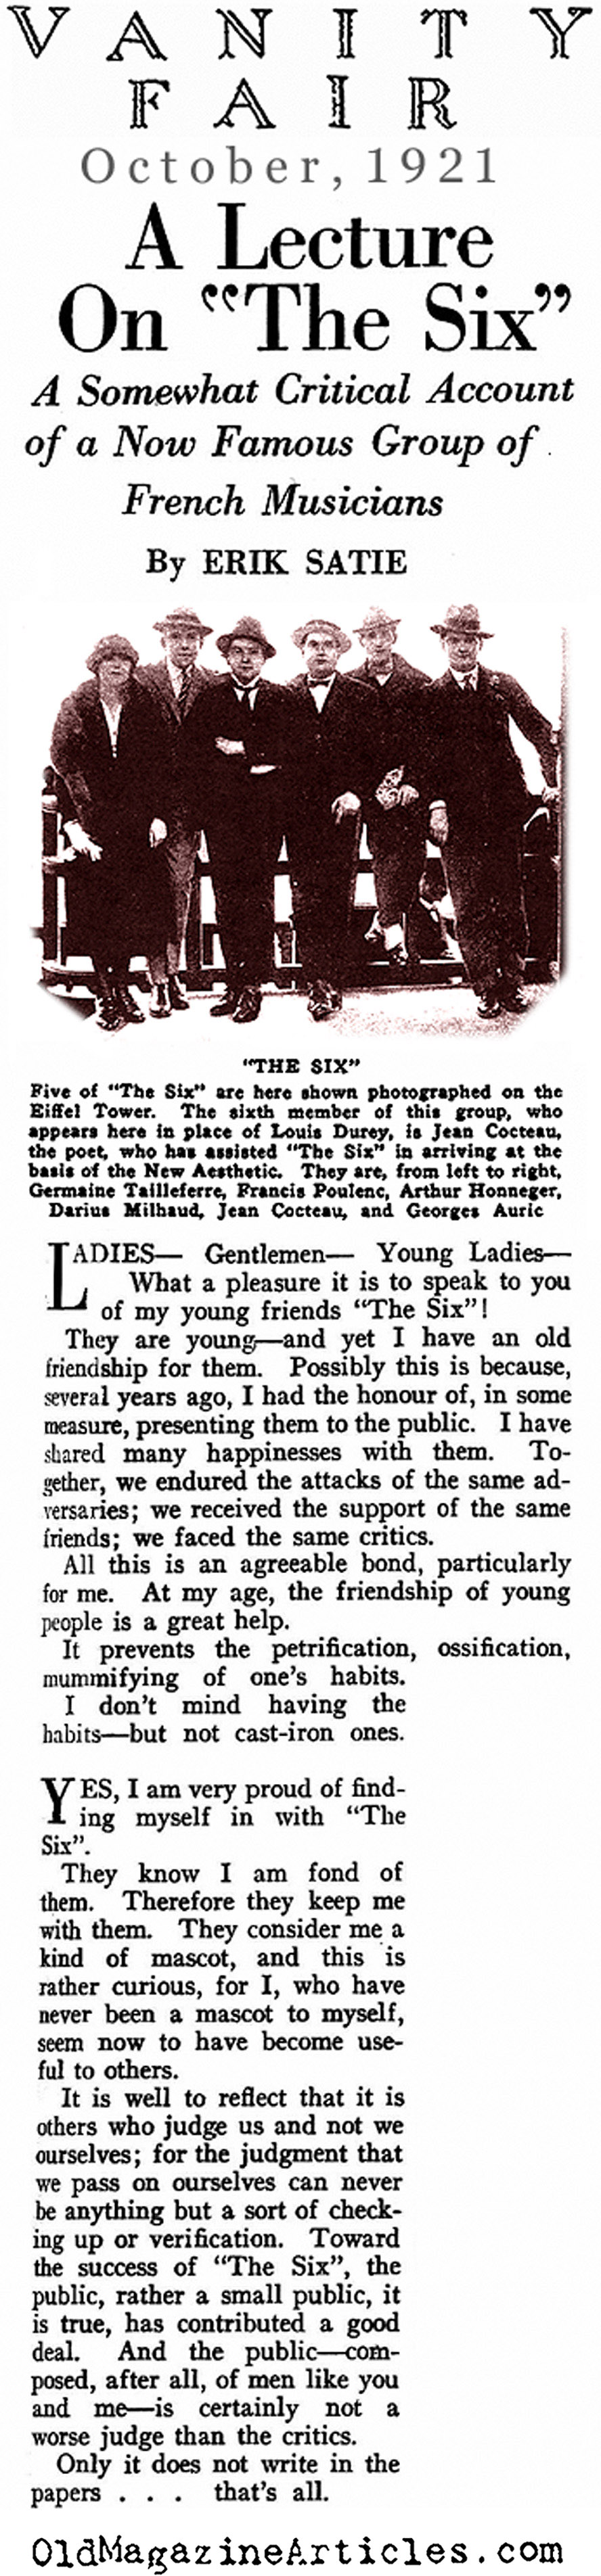 Erik Satie and Les Six (Vanity Fair, 1921)